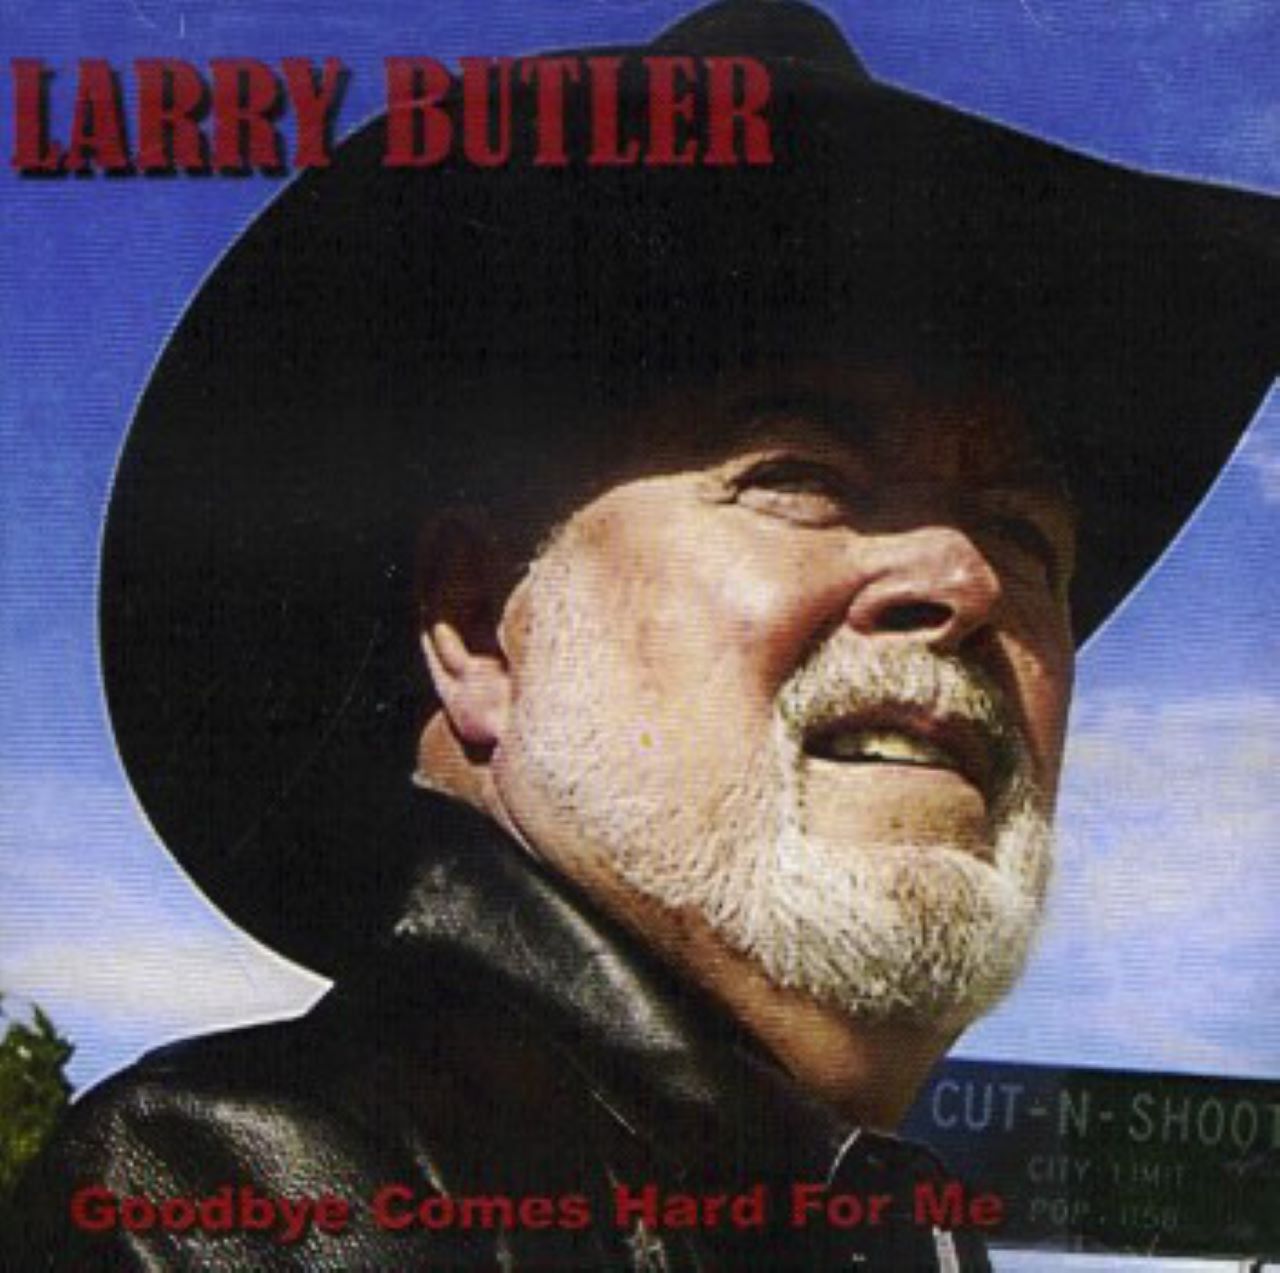 Larry Butler - Goodbye Comes Hard For Me cover album